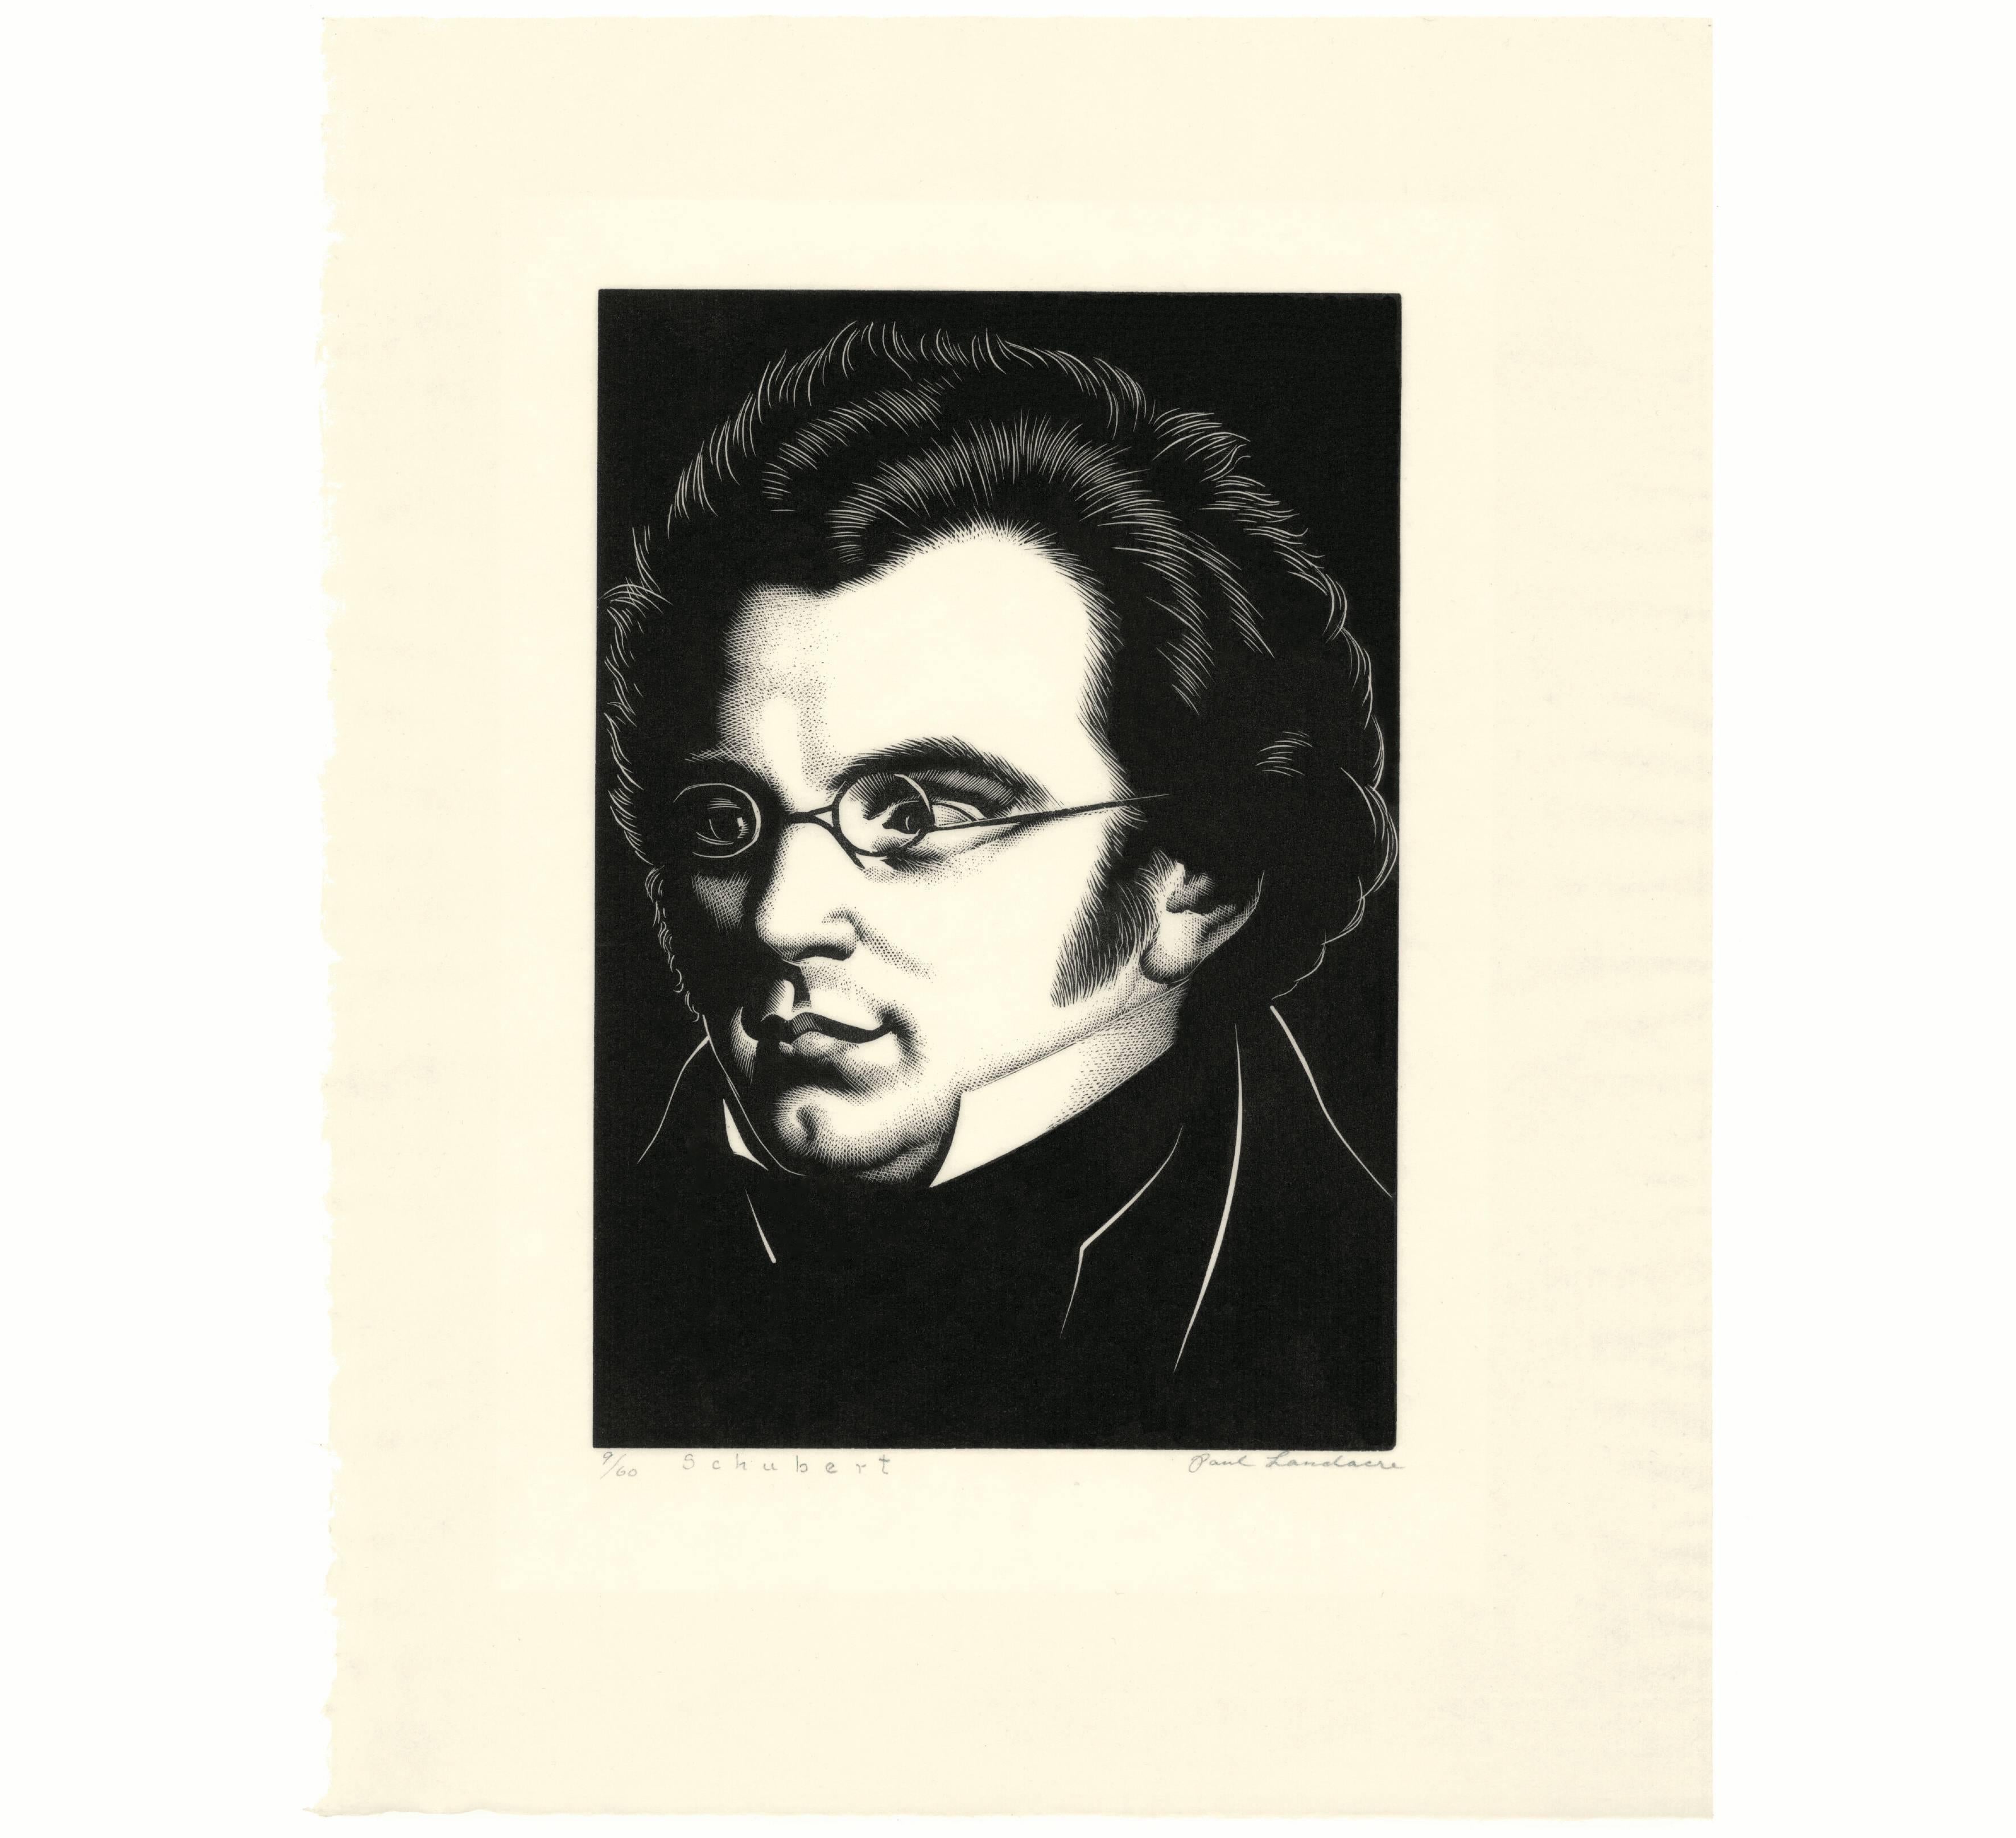 Schubert - Print by Paul Landacre